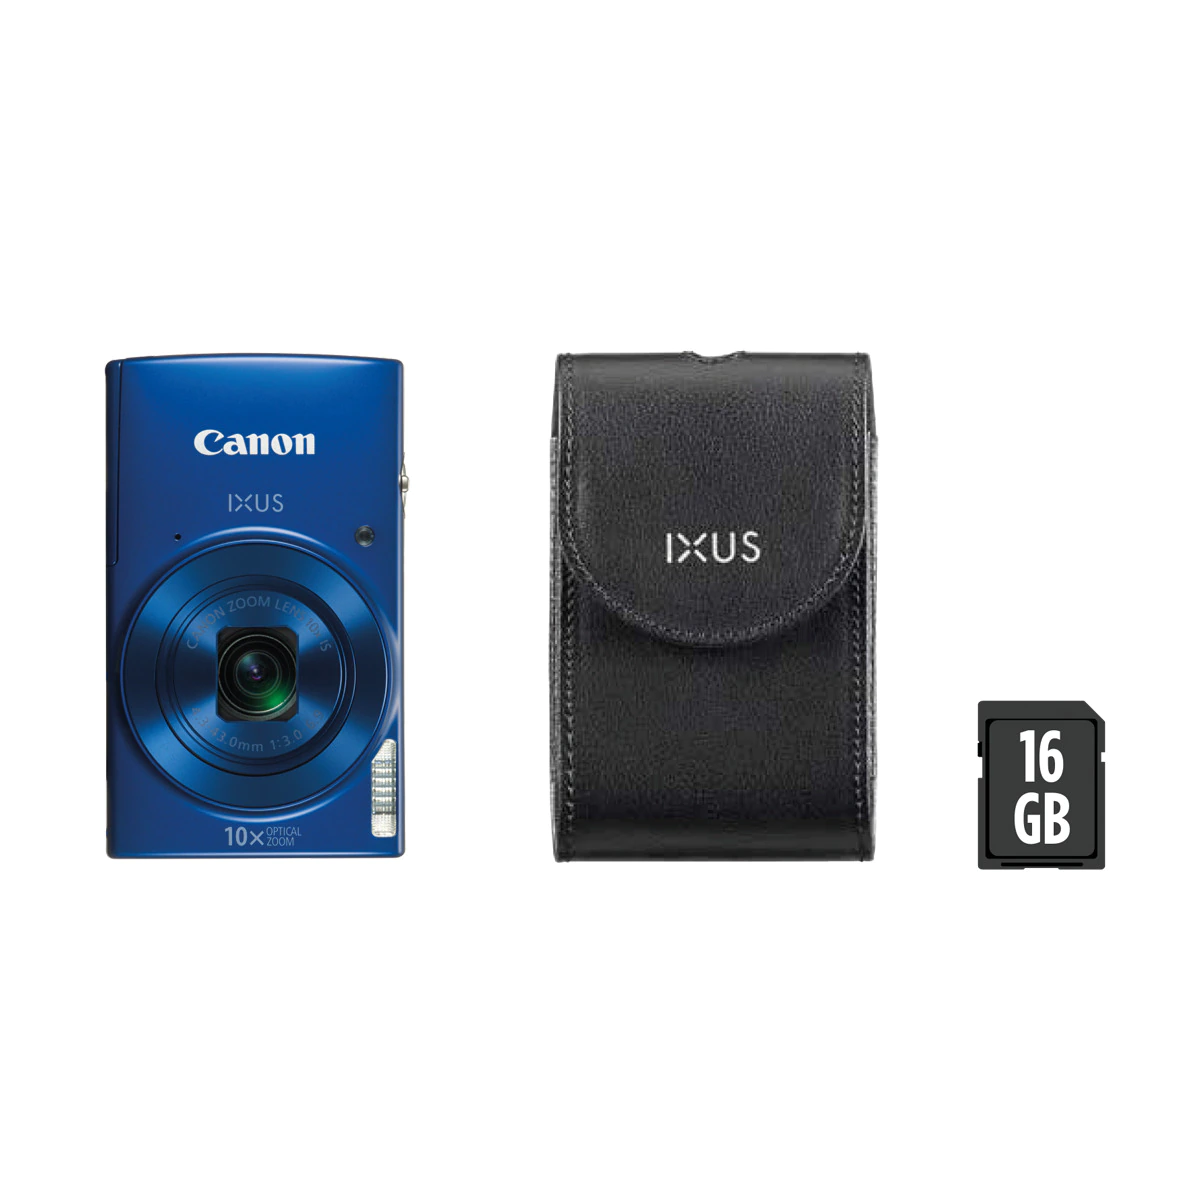 Cámara compacta Canon IXUS 190 Azul 20MP + funda y tarjeta SD 16GB